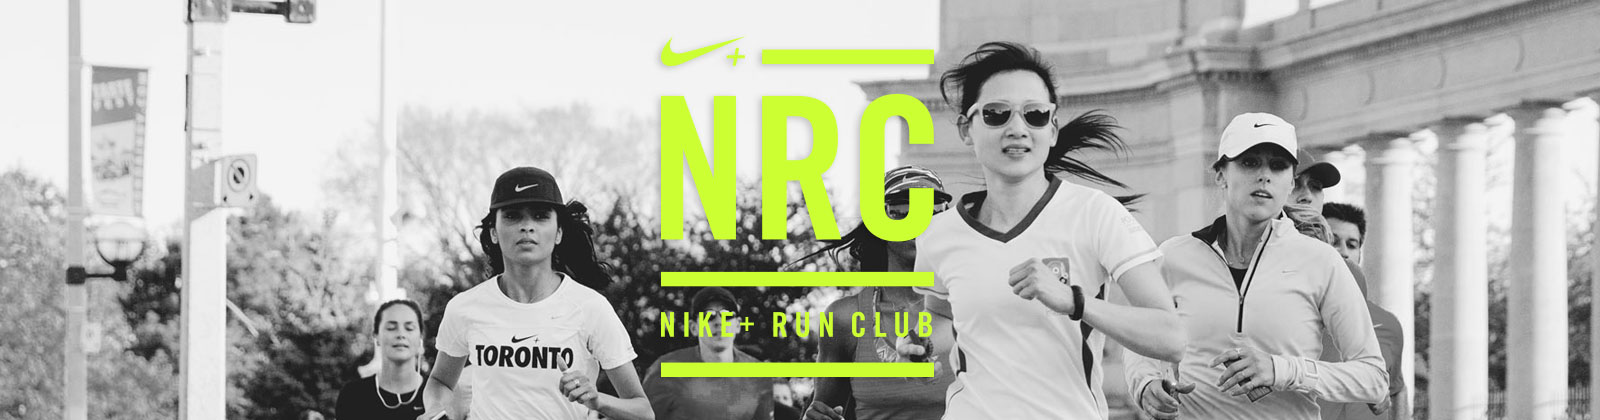 Nike+ Run Club | Nike